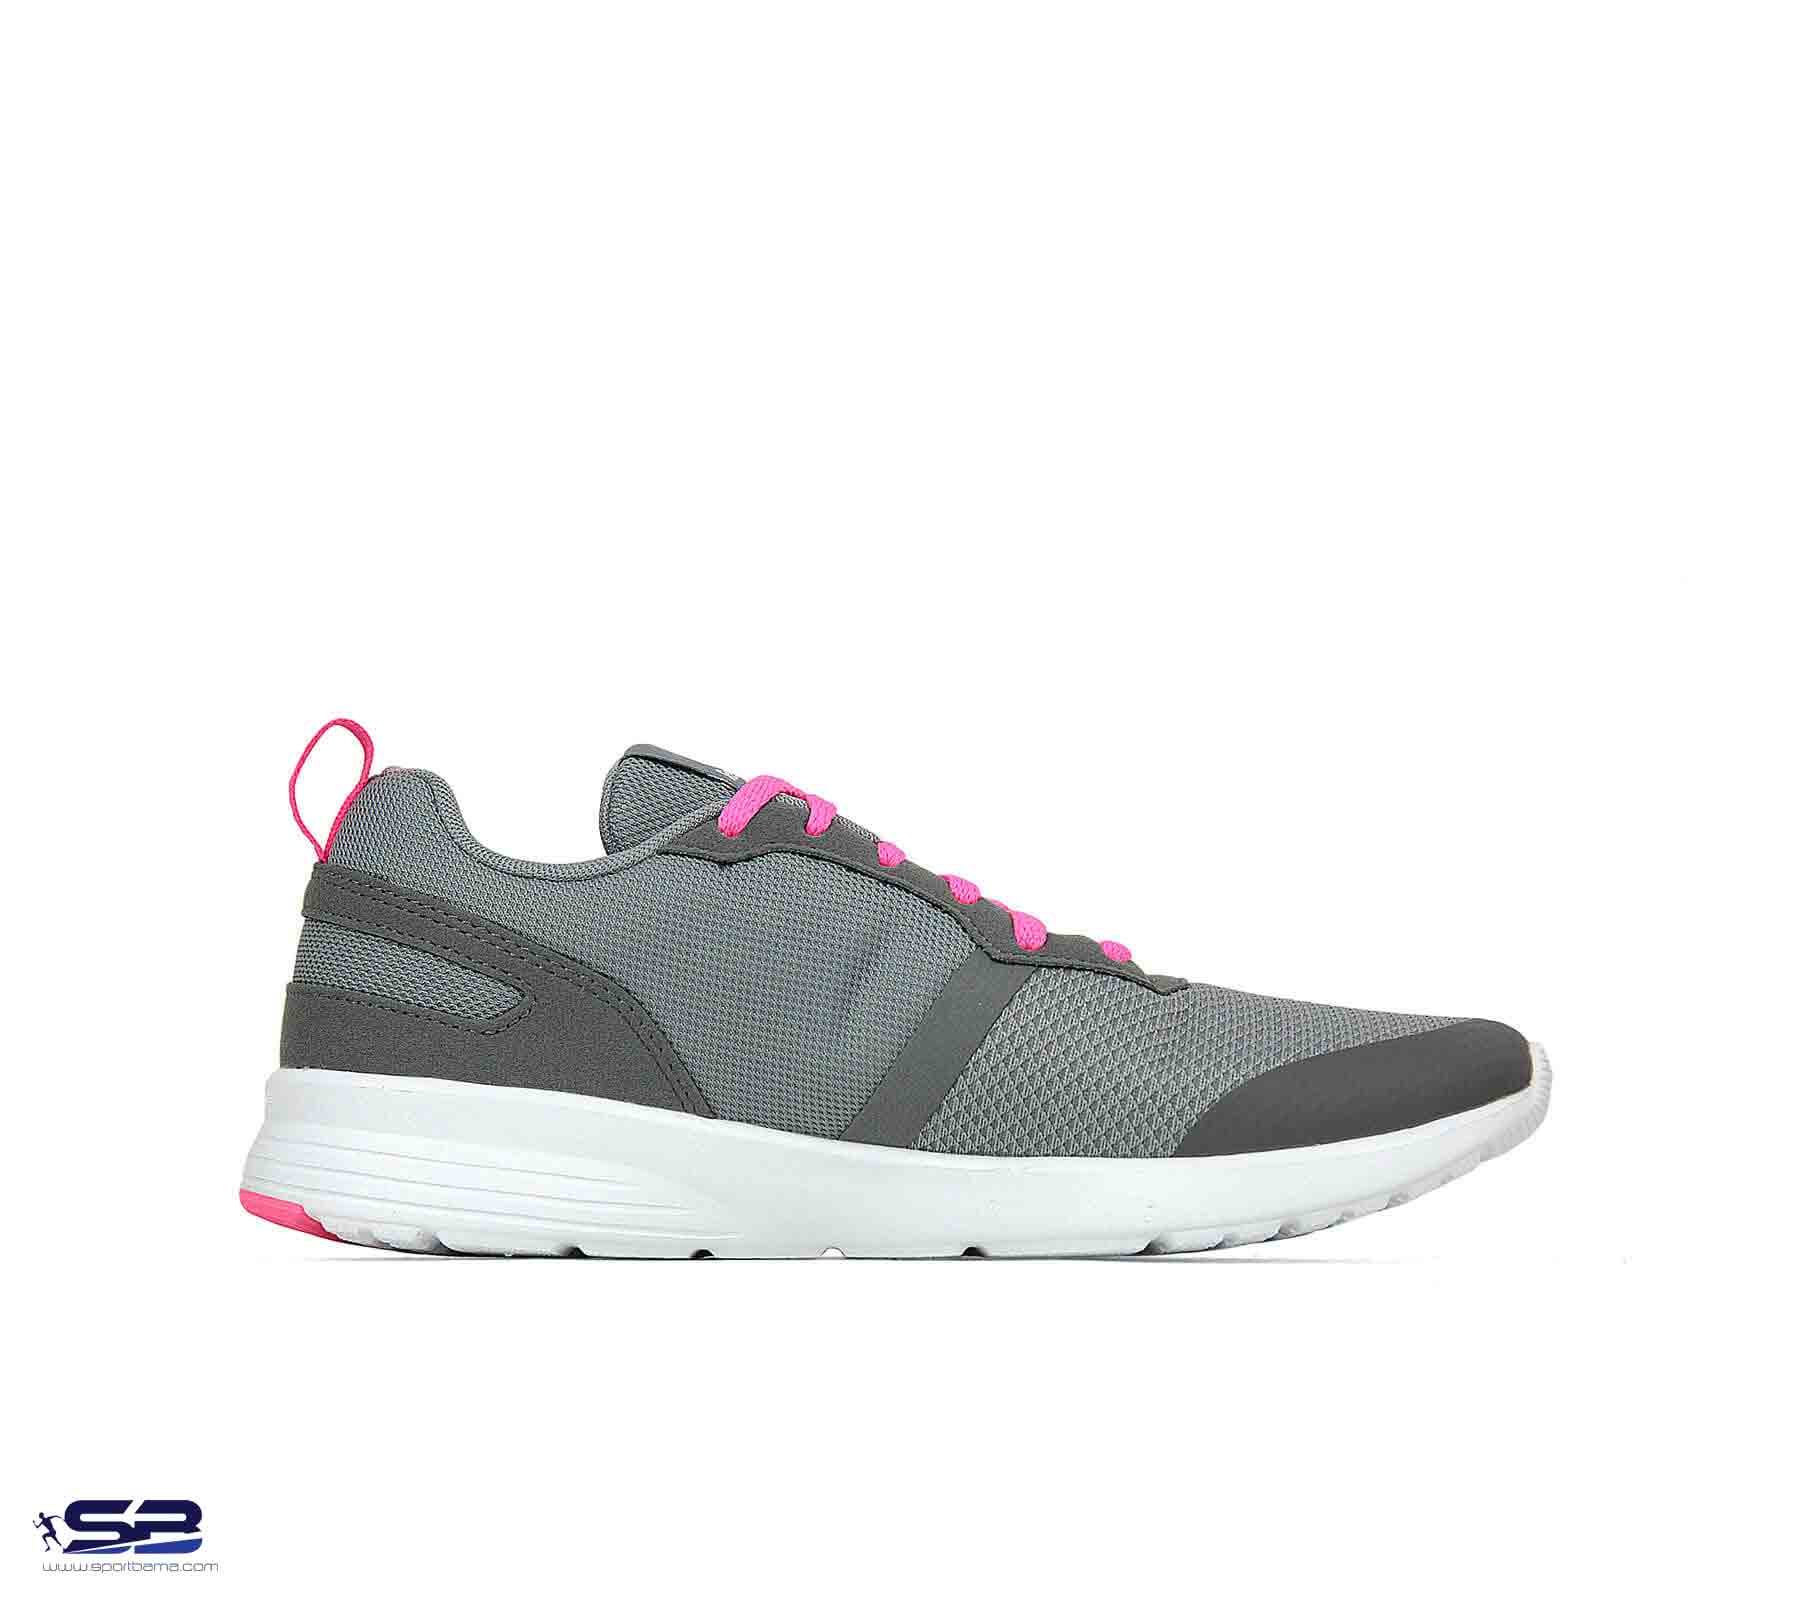  خرید  کفش کتانی اورجینال ریباک     Reebok Running Shoes BS6907  